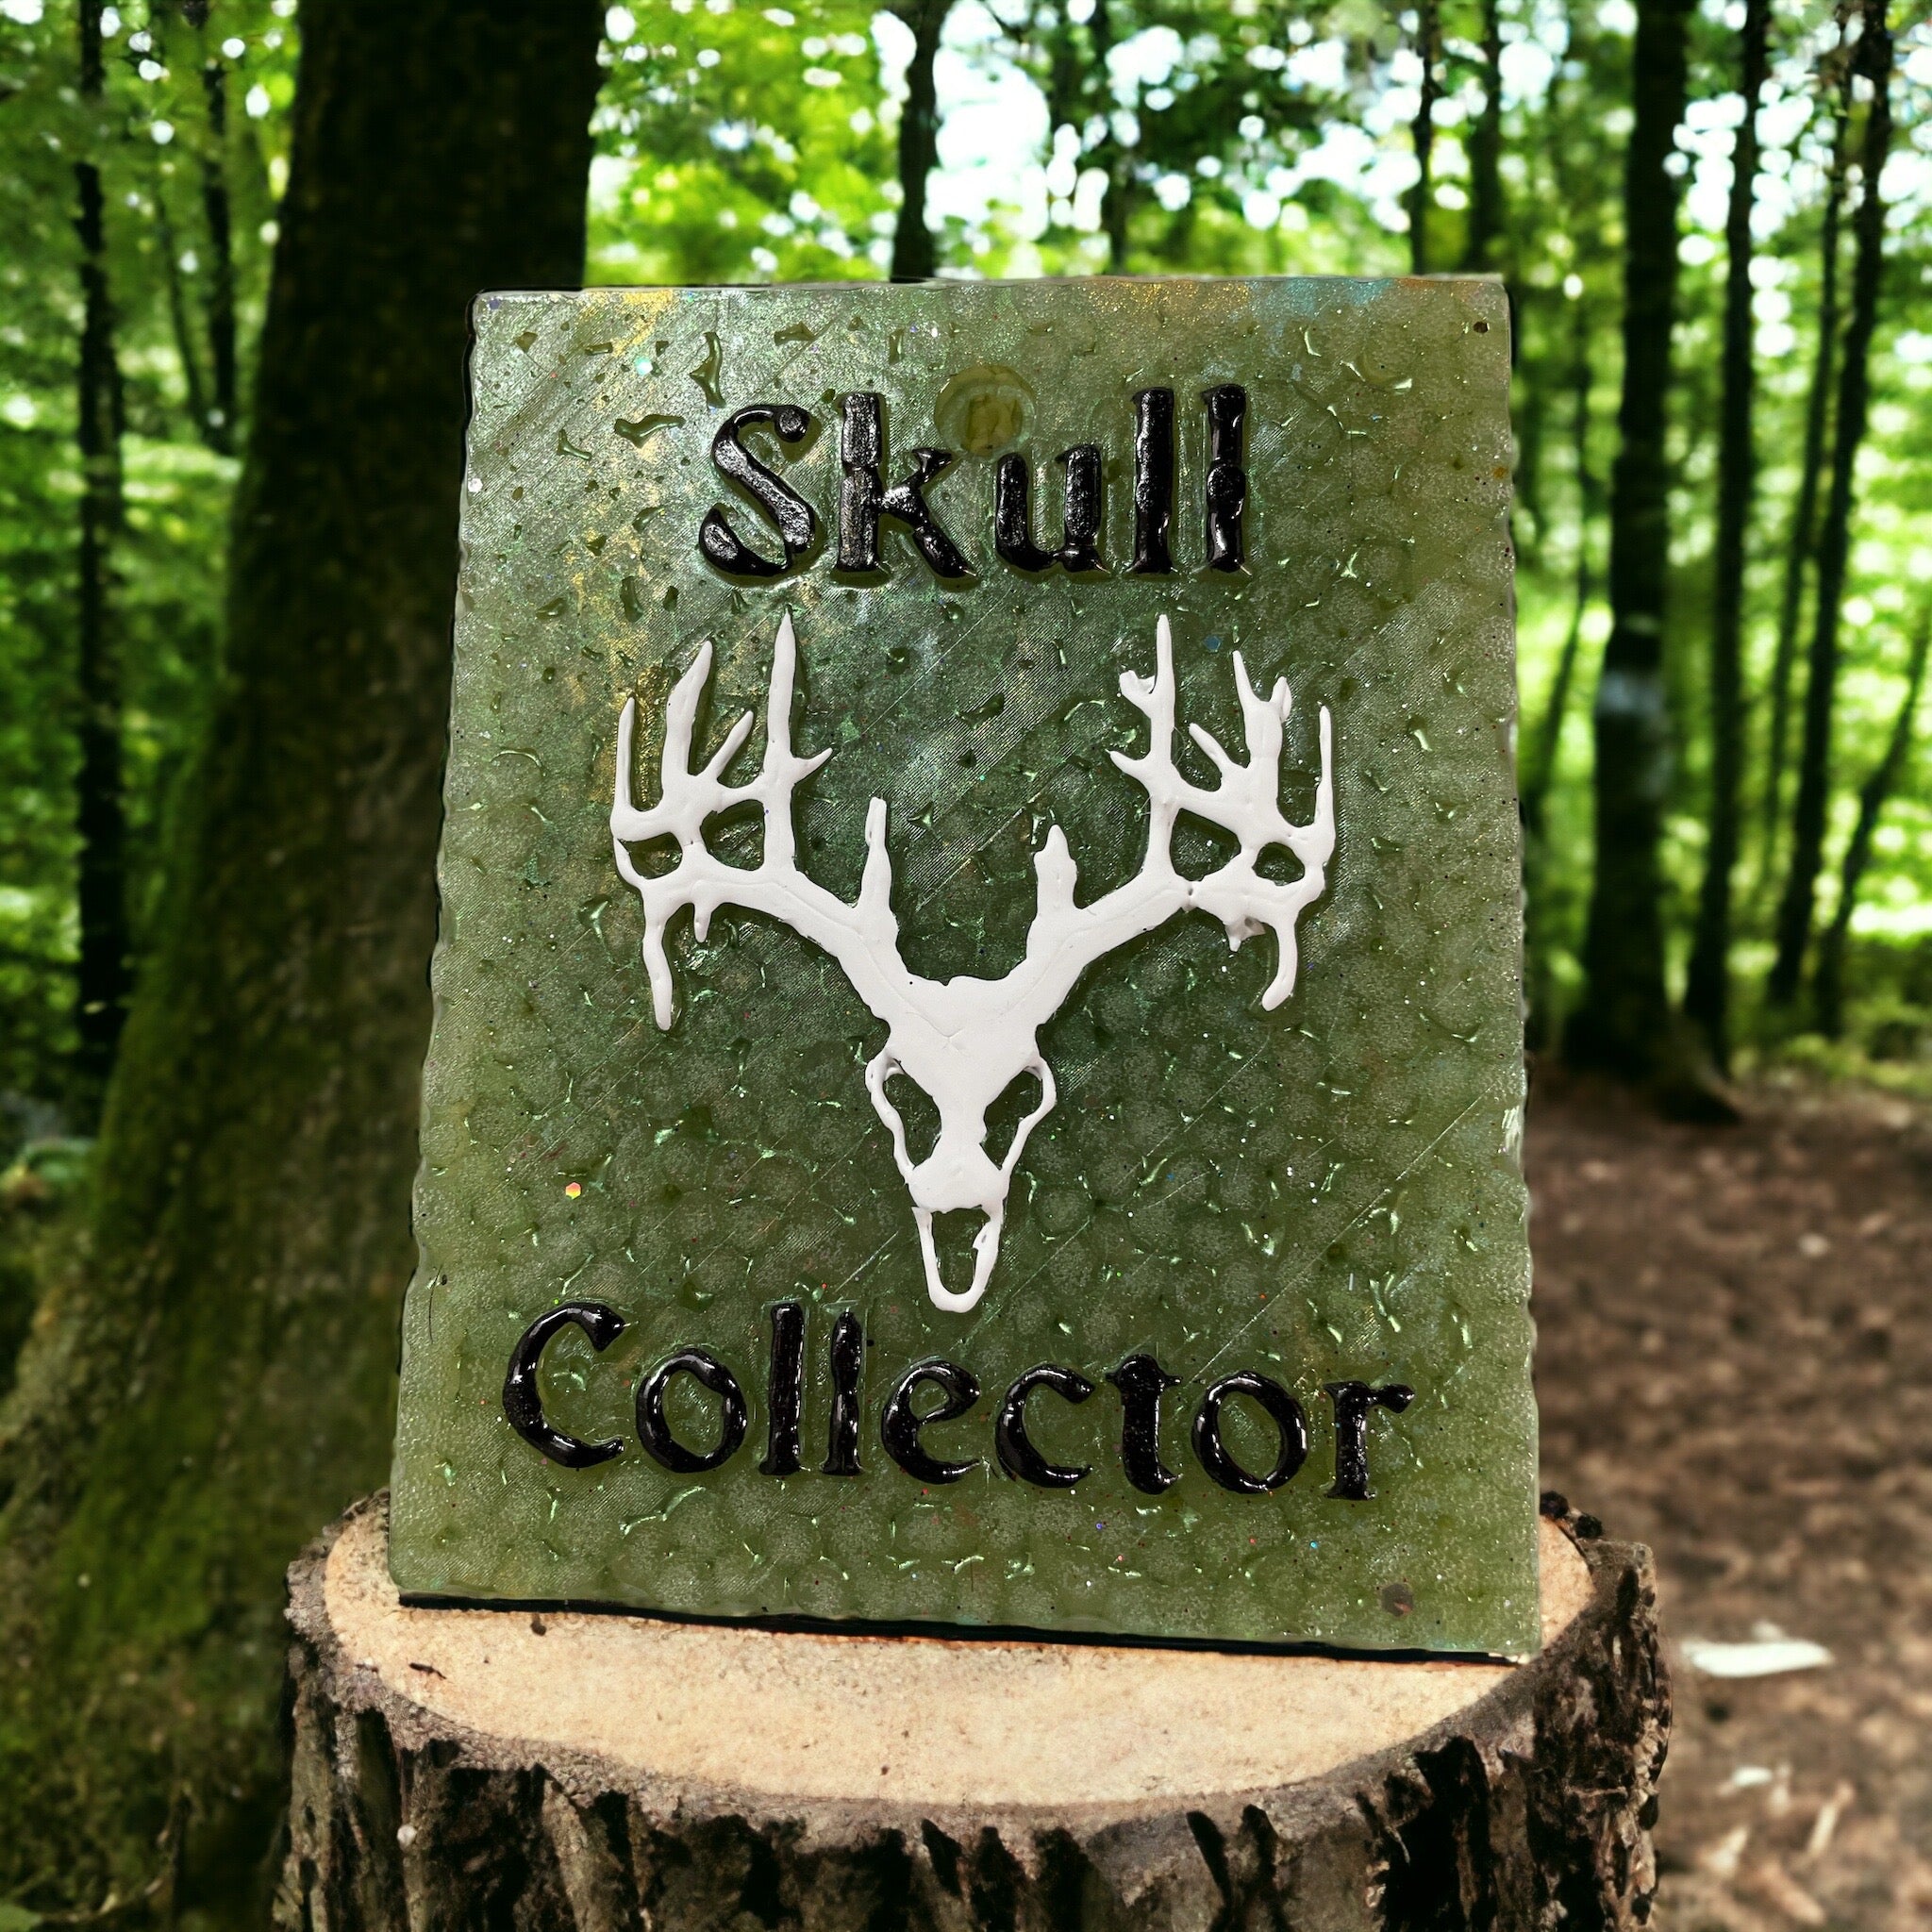 Skull Collector